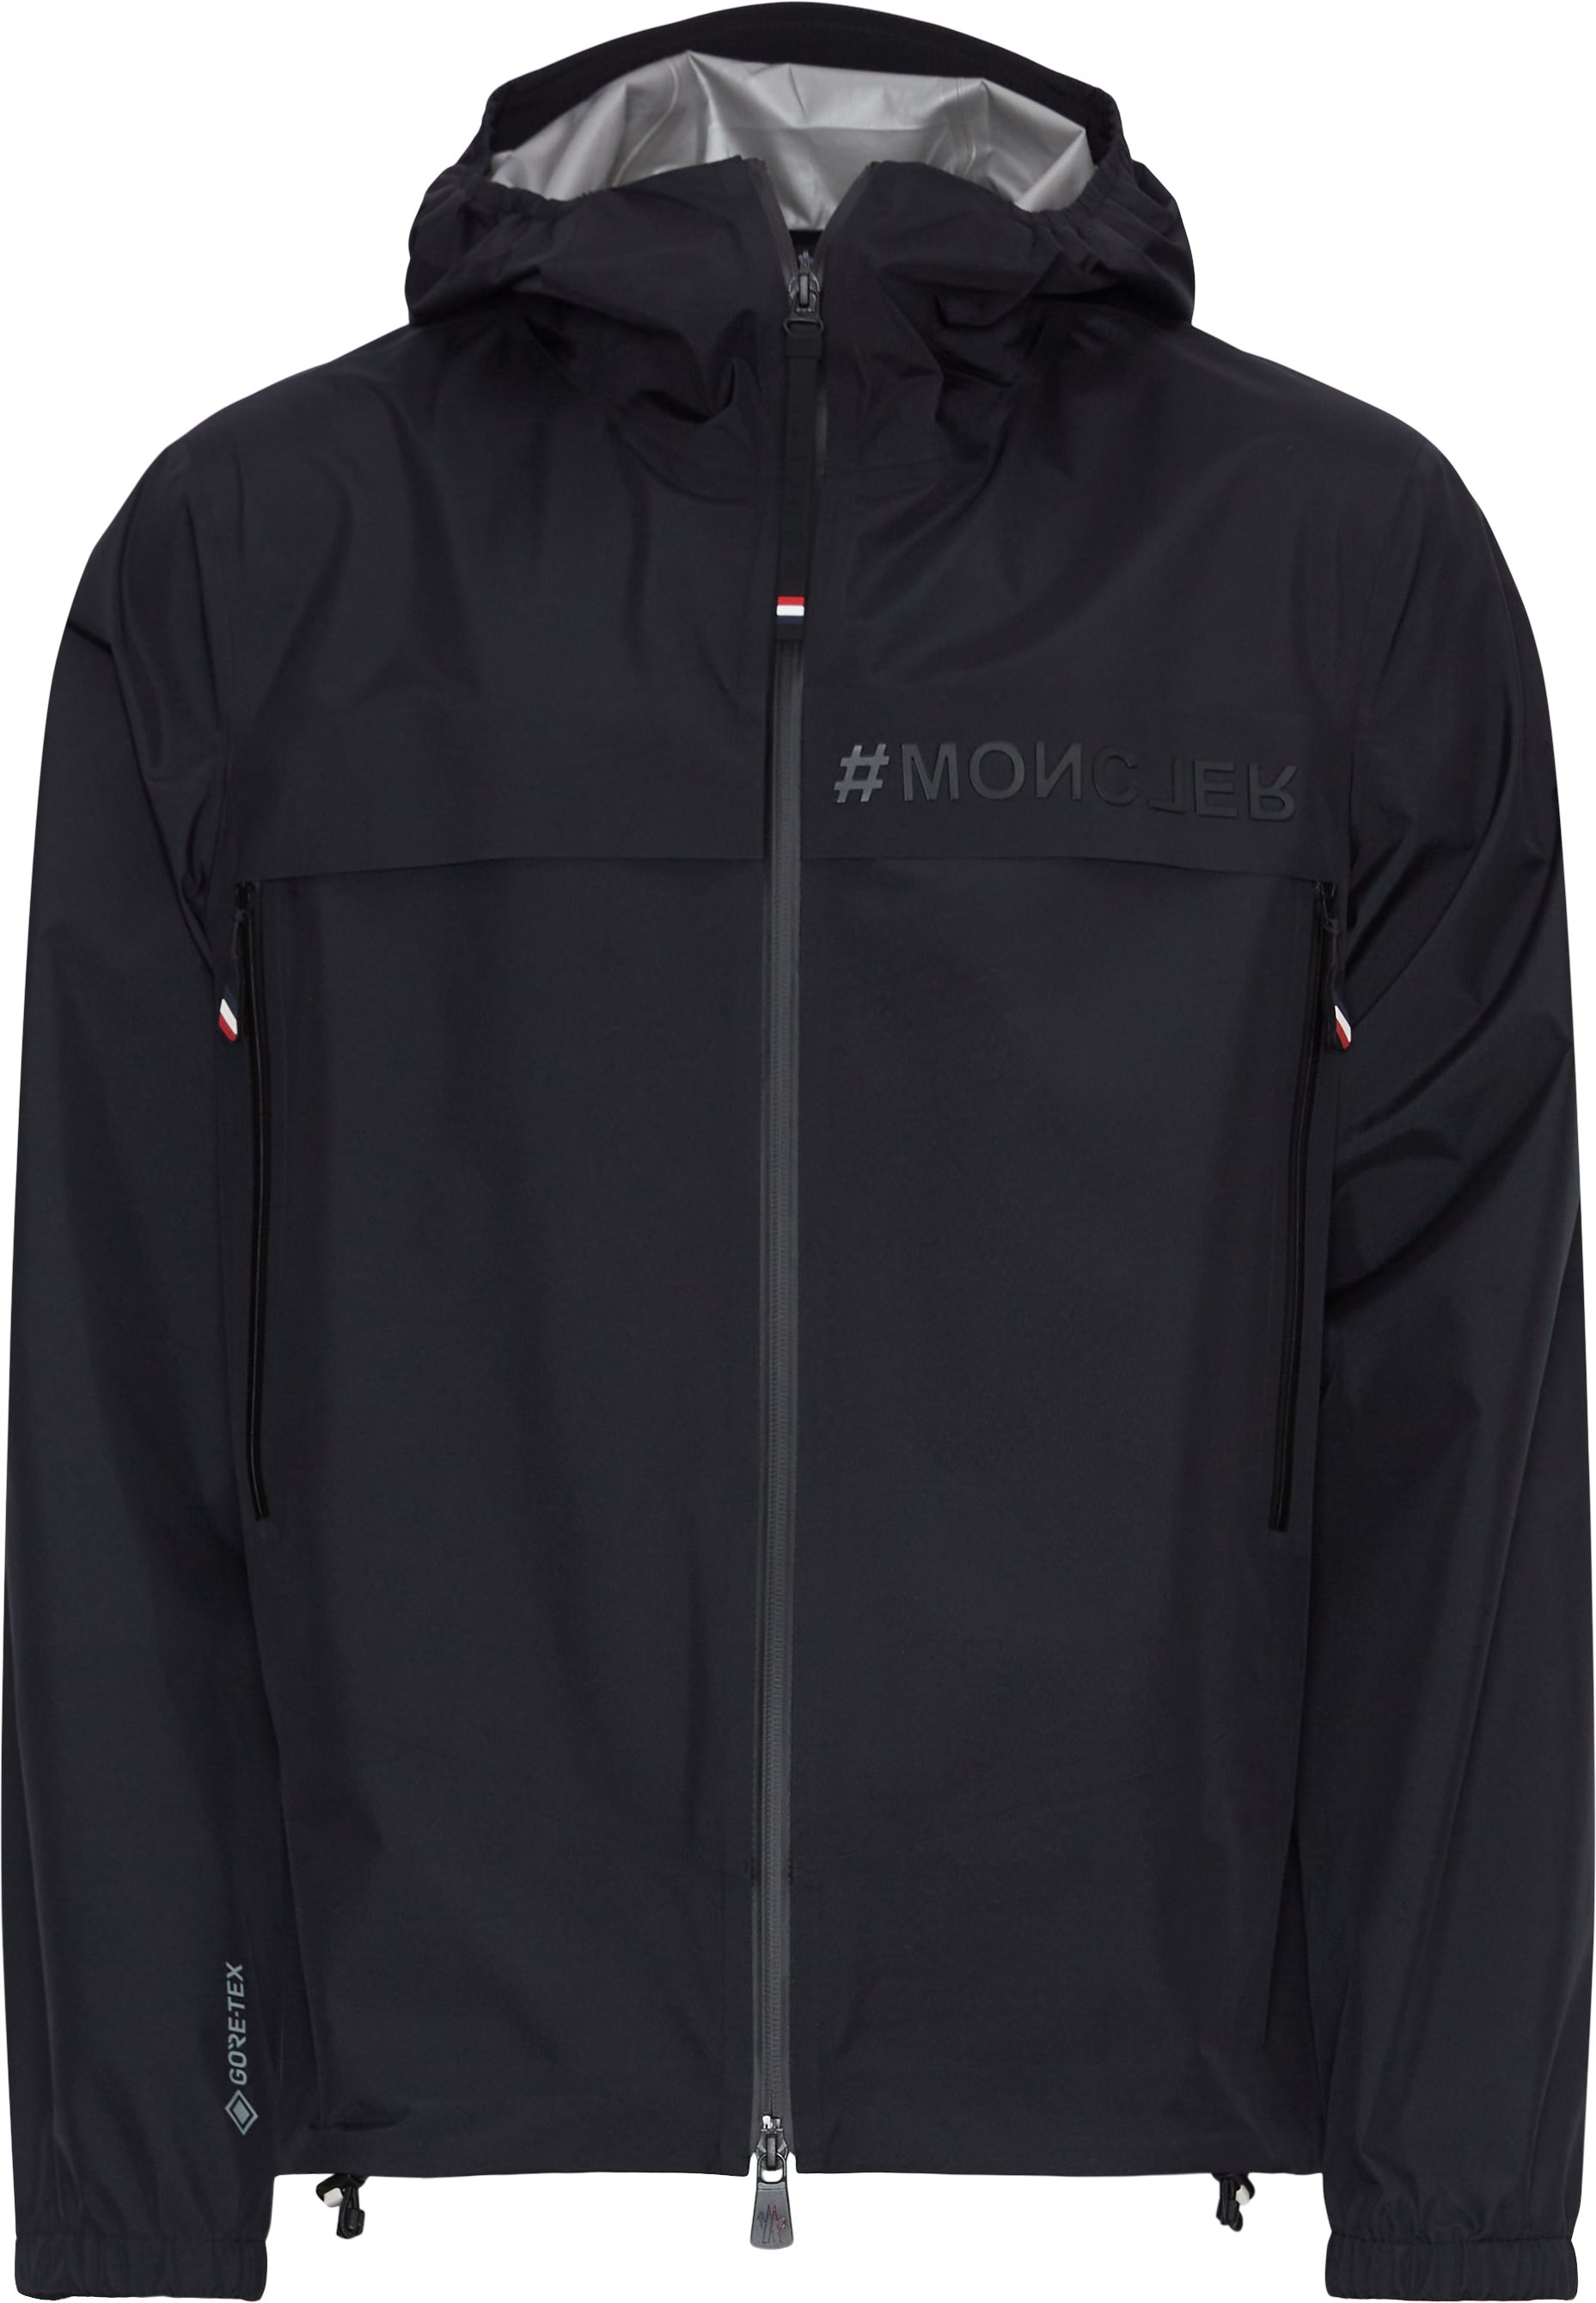 Moncler Grenoble Jackets SHIPTON JKT 1A00012 54AL5 Black